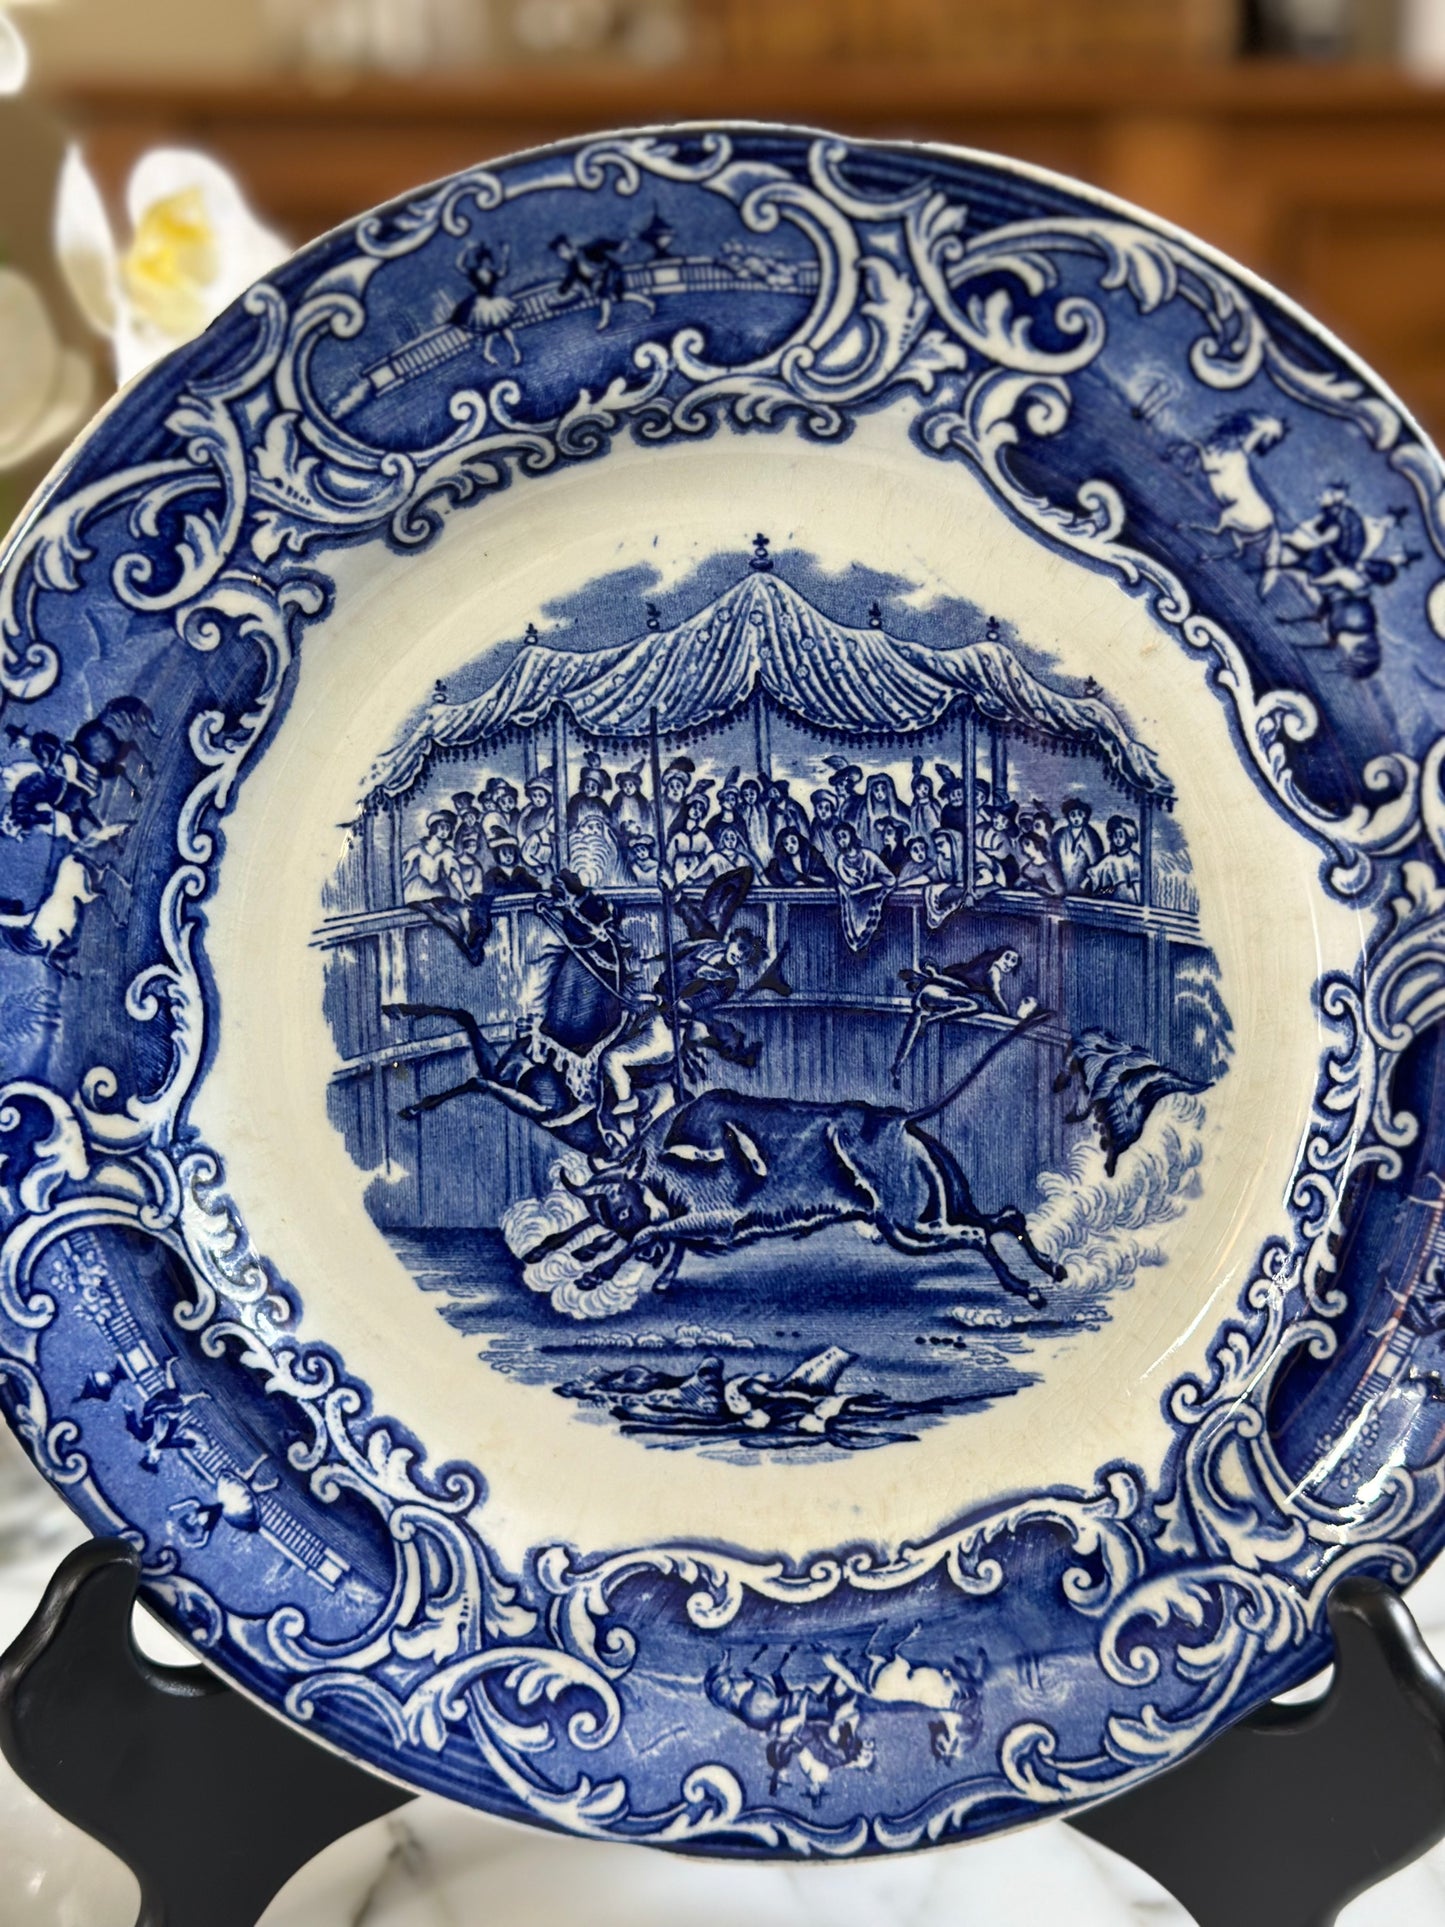 Antique, 1795 costumes Espanoles, blue and white 10.5"D English plate